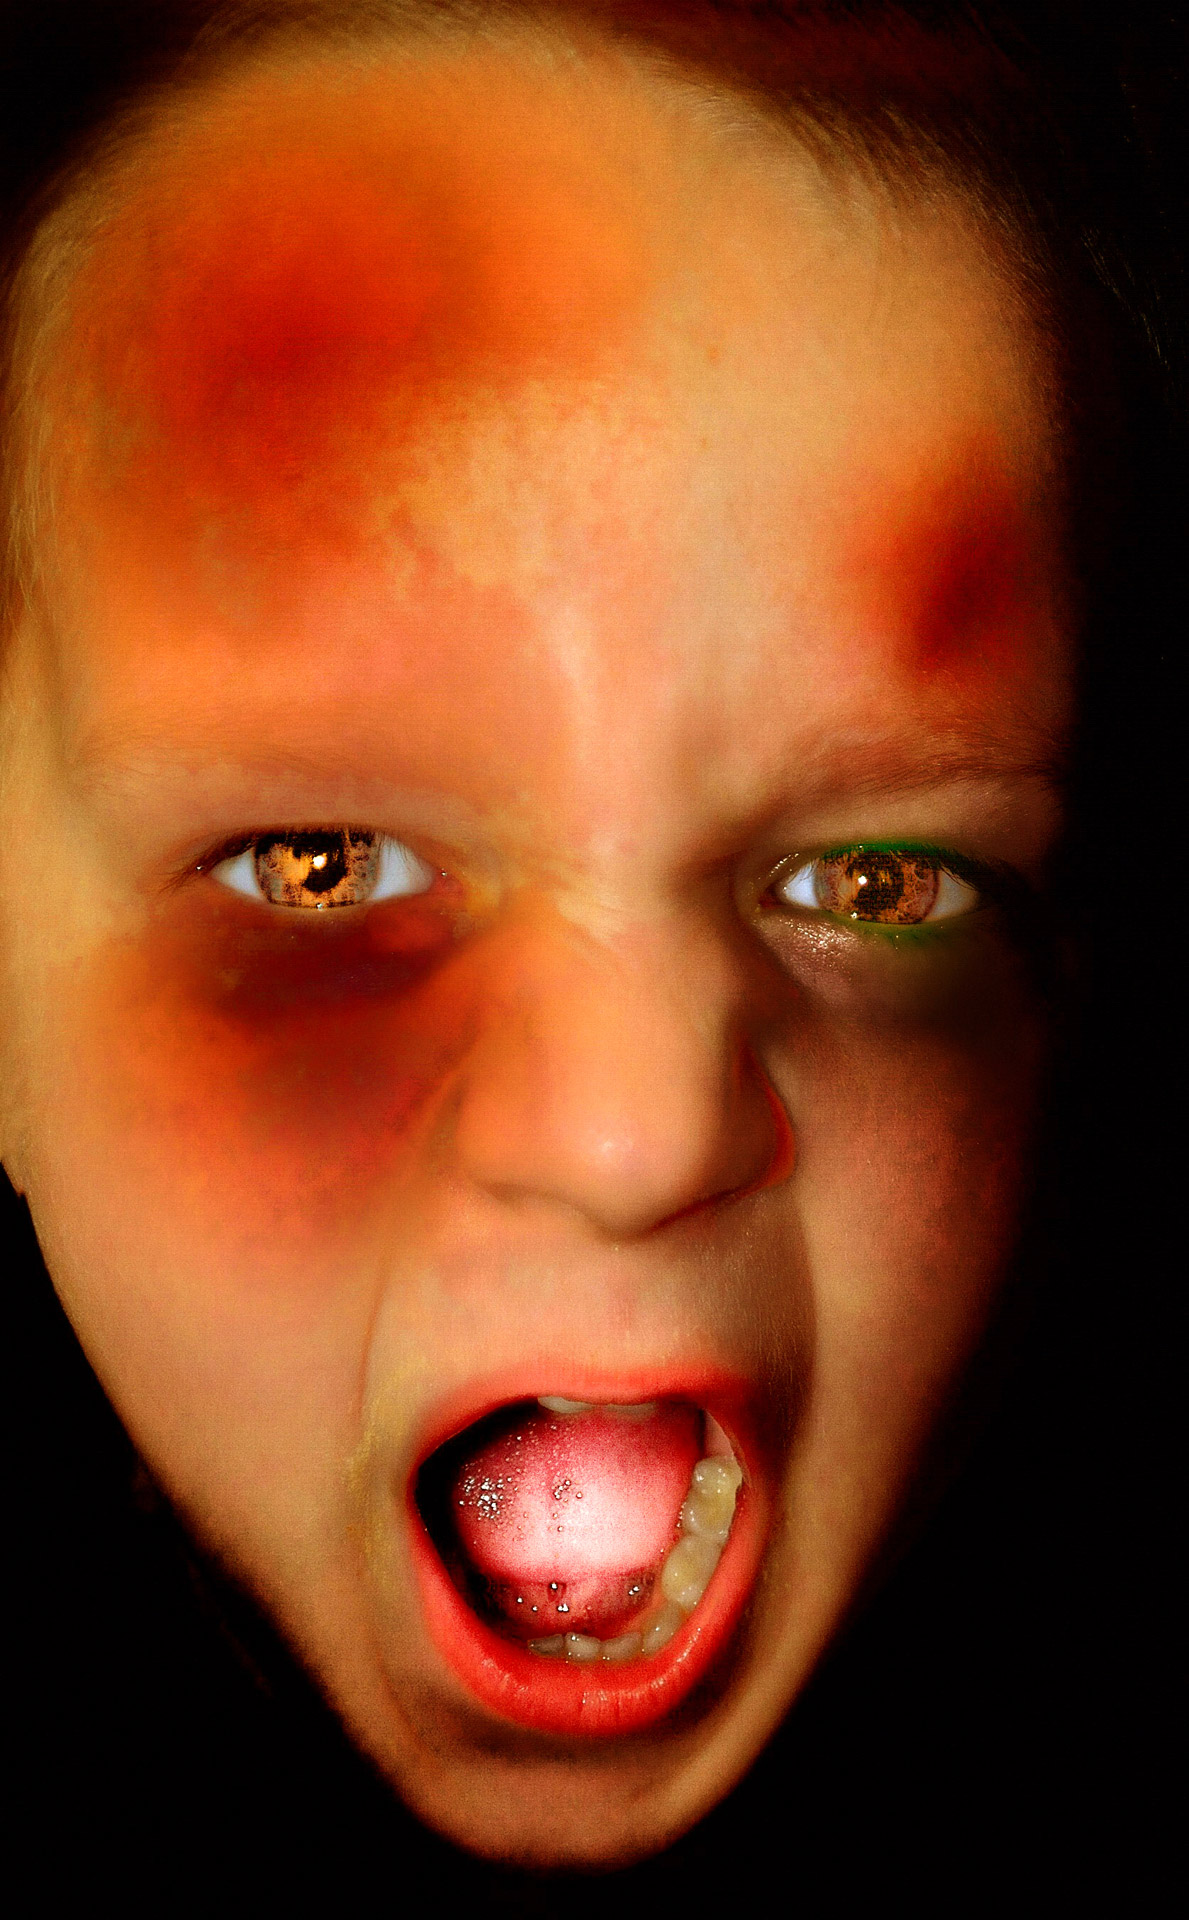 hellboy devil child free photo